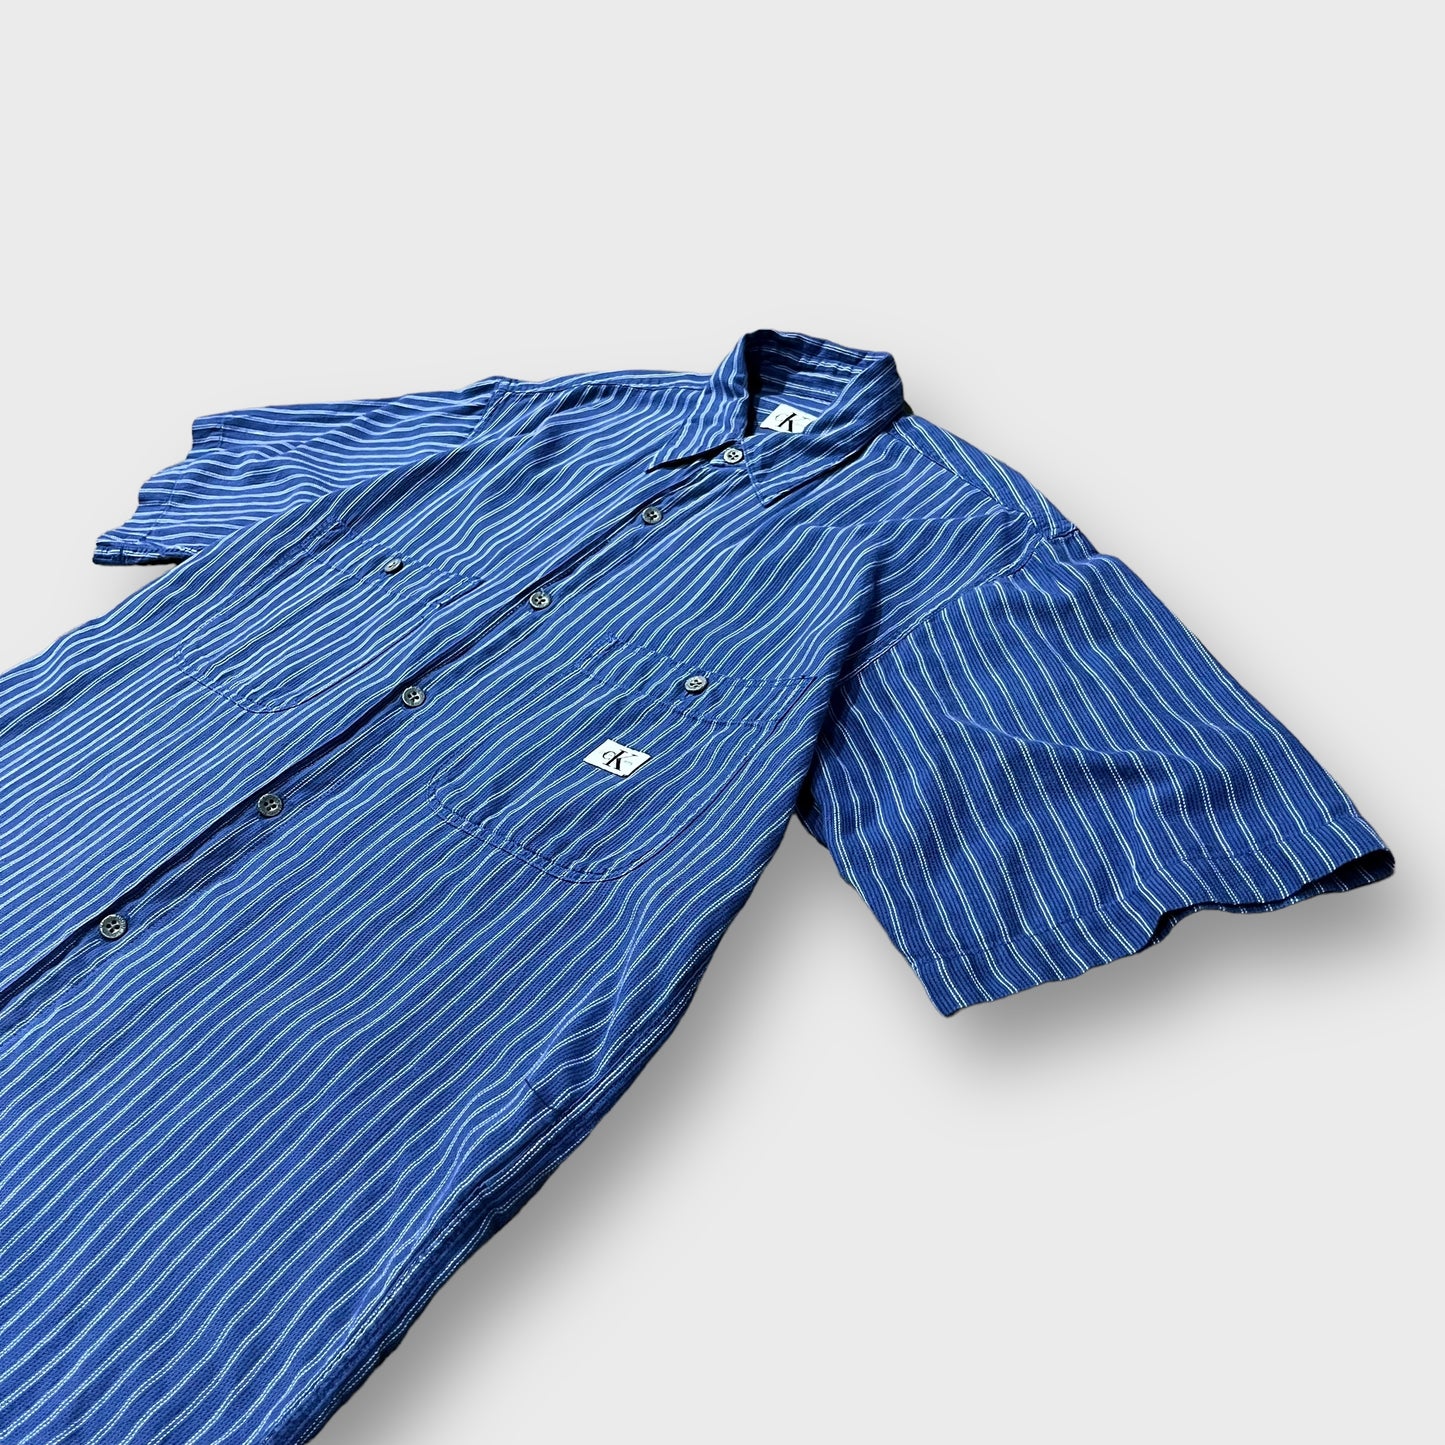 90’s “Calvin Klein”
s/s stripe pattern shirt